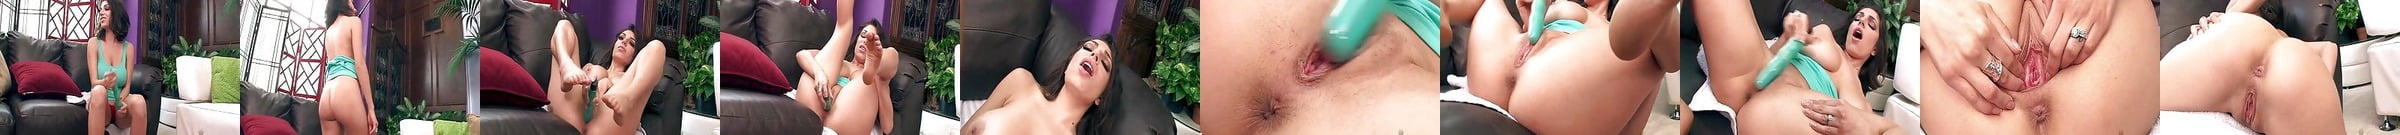 Anissa Kate Sex Toy Video Free Youjizz Sex Hd Porn 4c